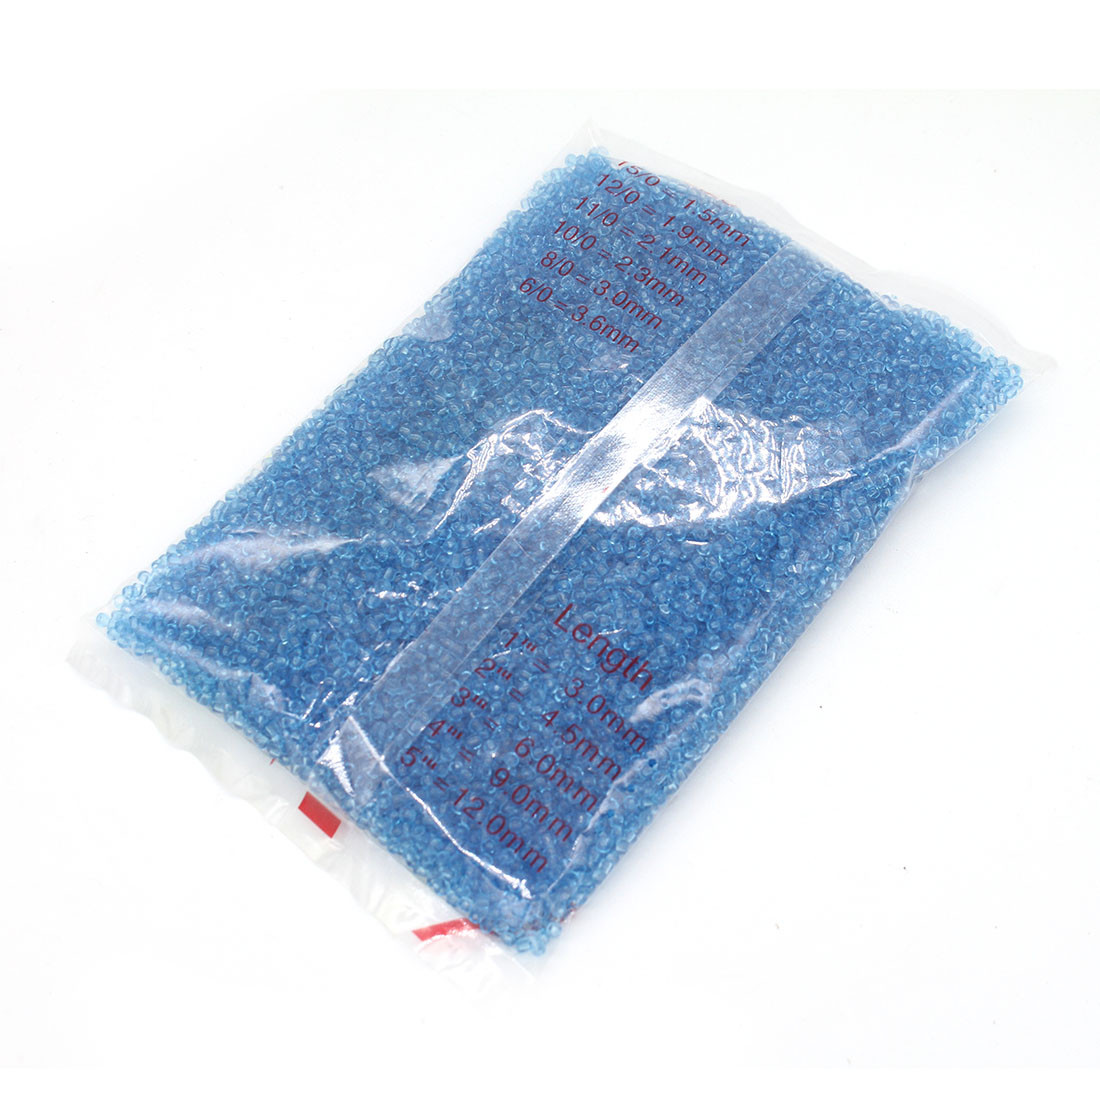 Royal blue 3mm 10,000 packs